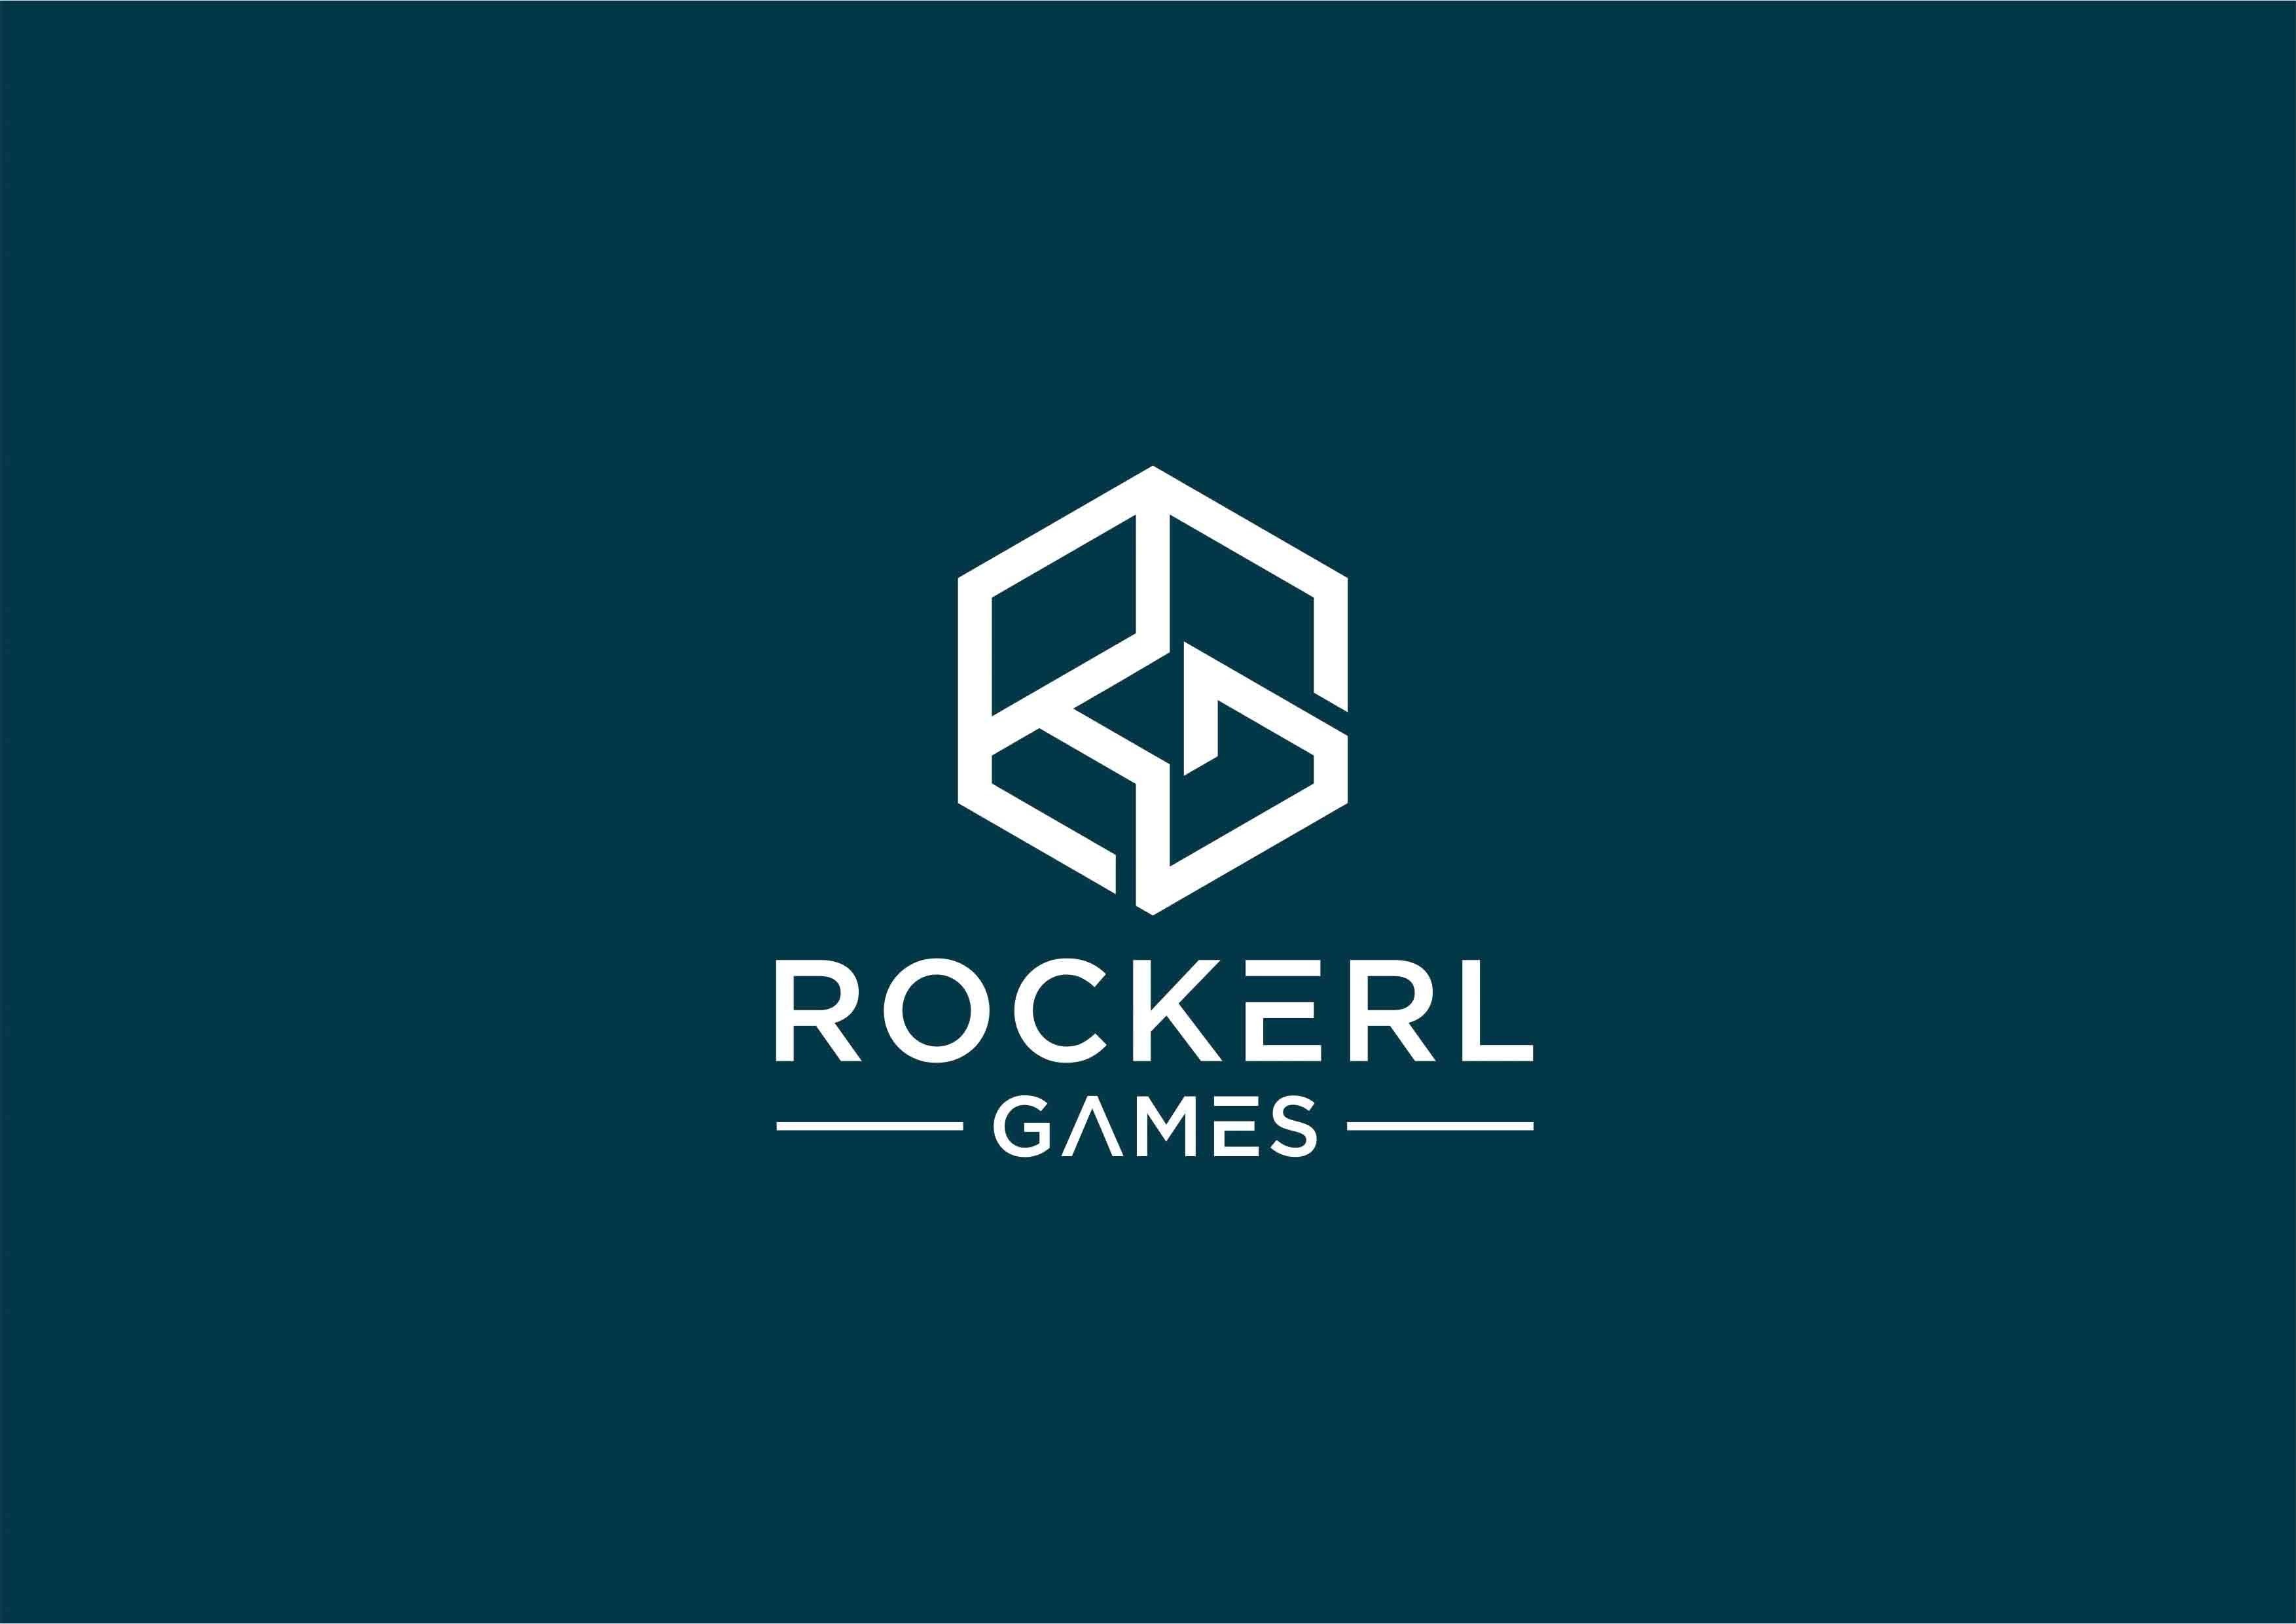 Rockerl Games